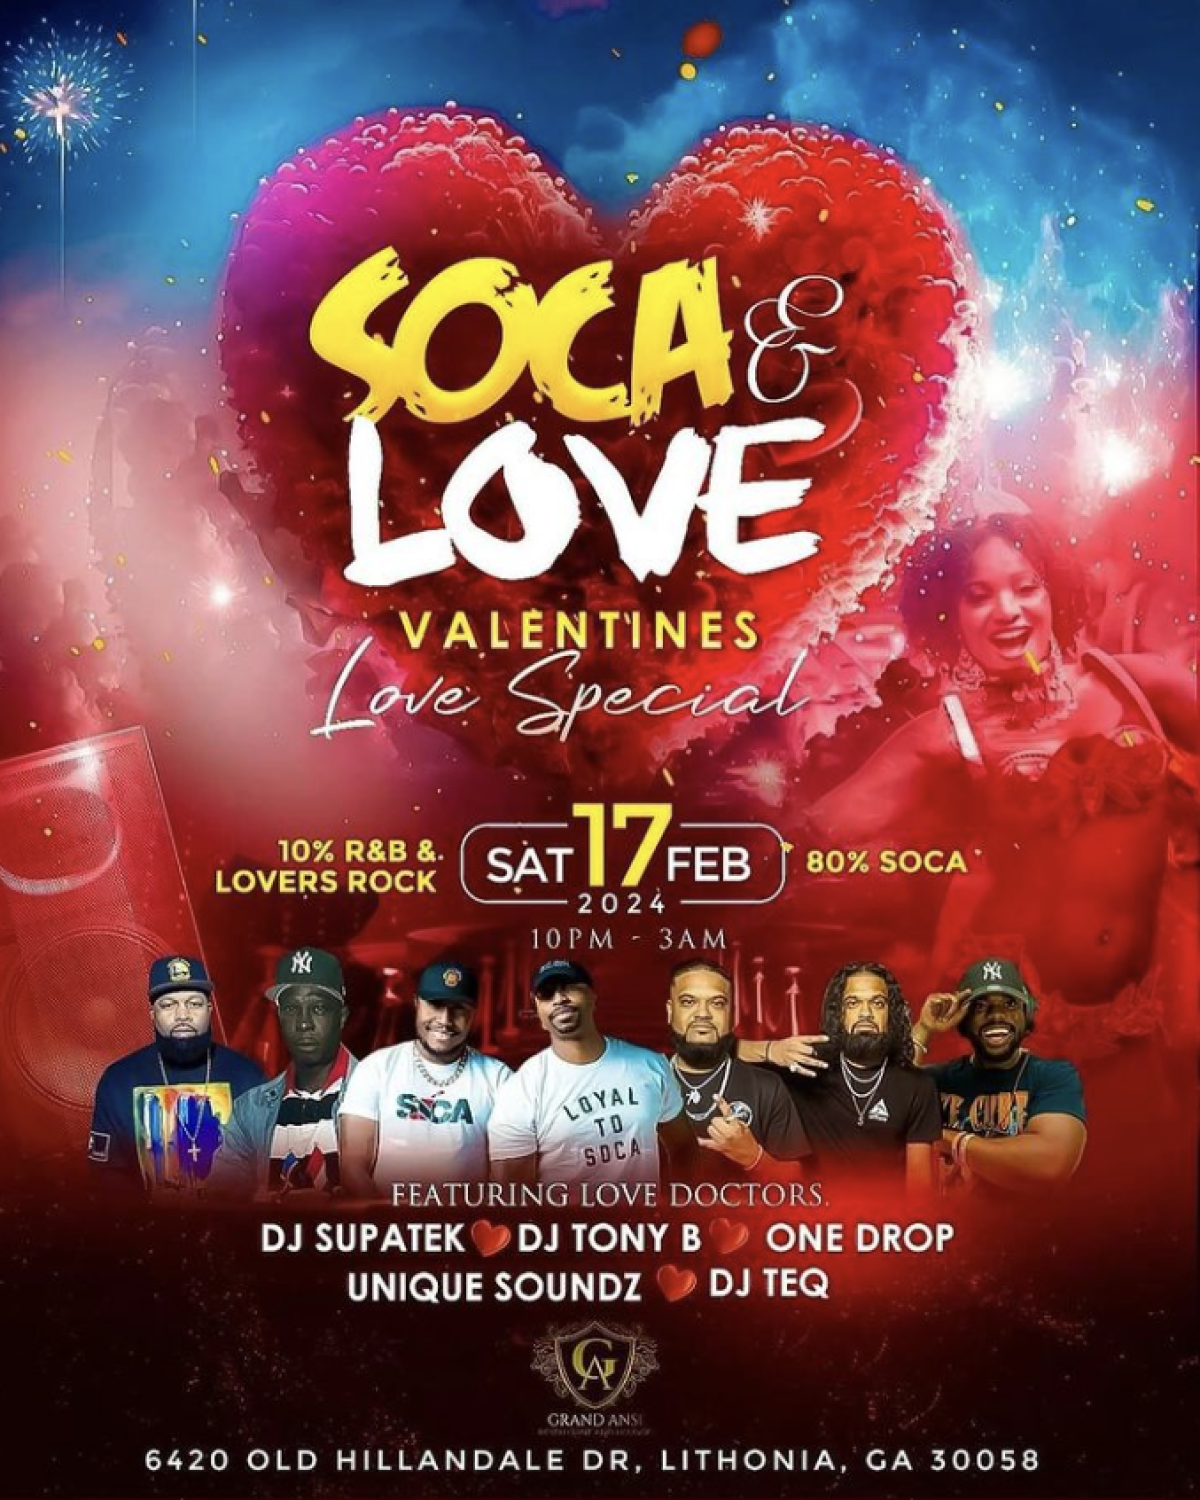 Soca & Love flyer or graphic.